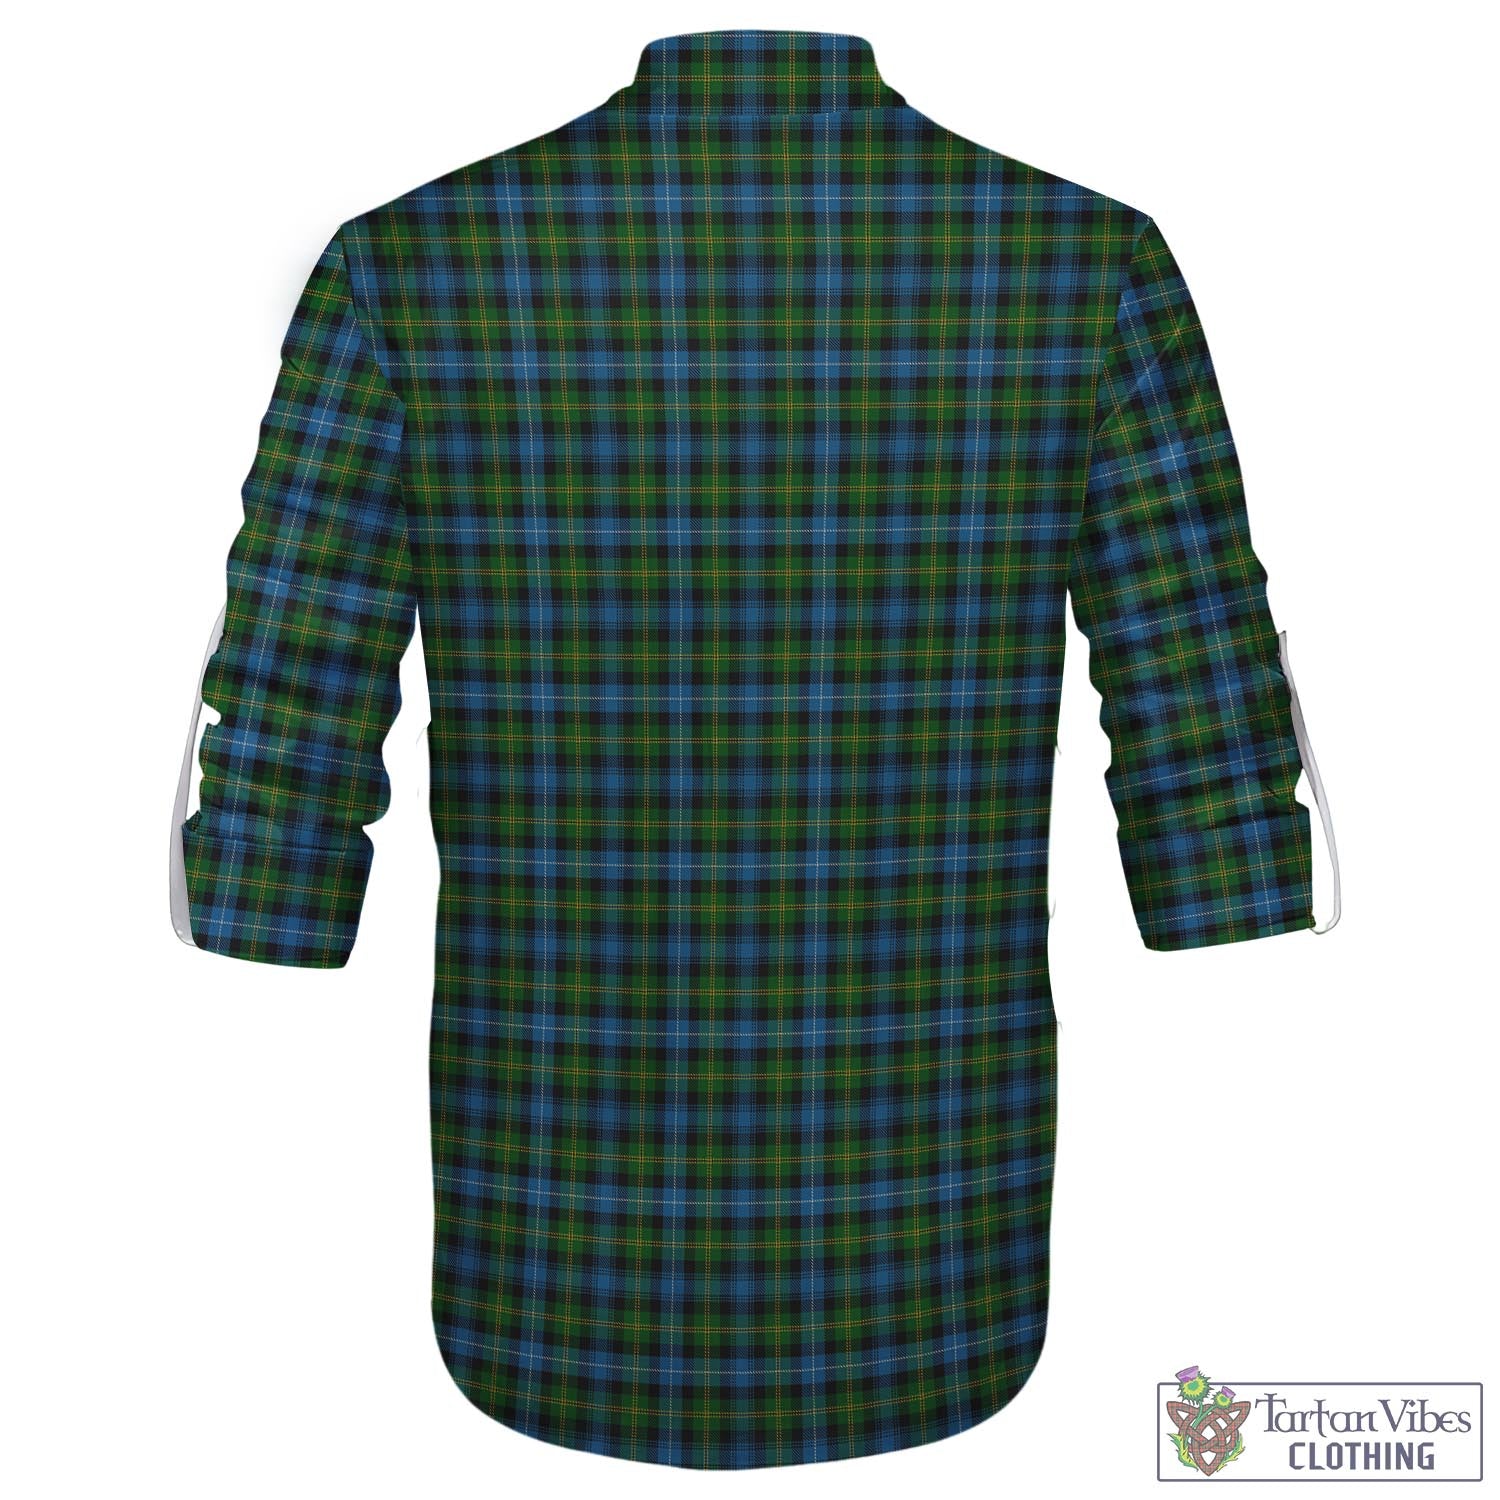 Tartan Vibes Clothing Dyce Tartan Men's Scottish Traditional Jacobite Ghillie Kilt Shirt